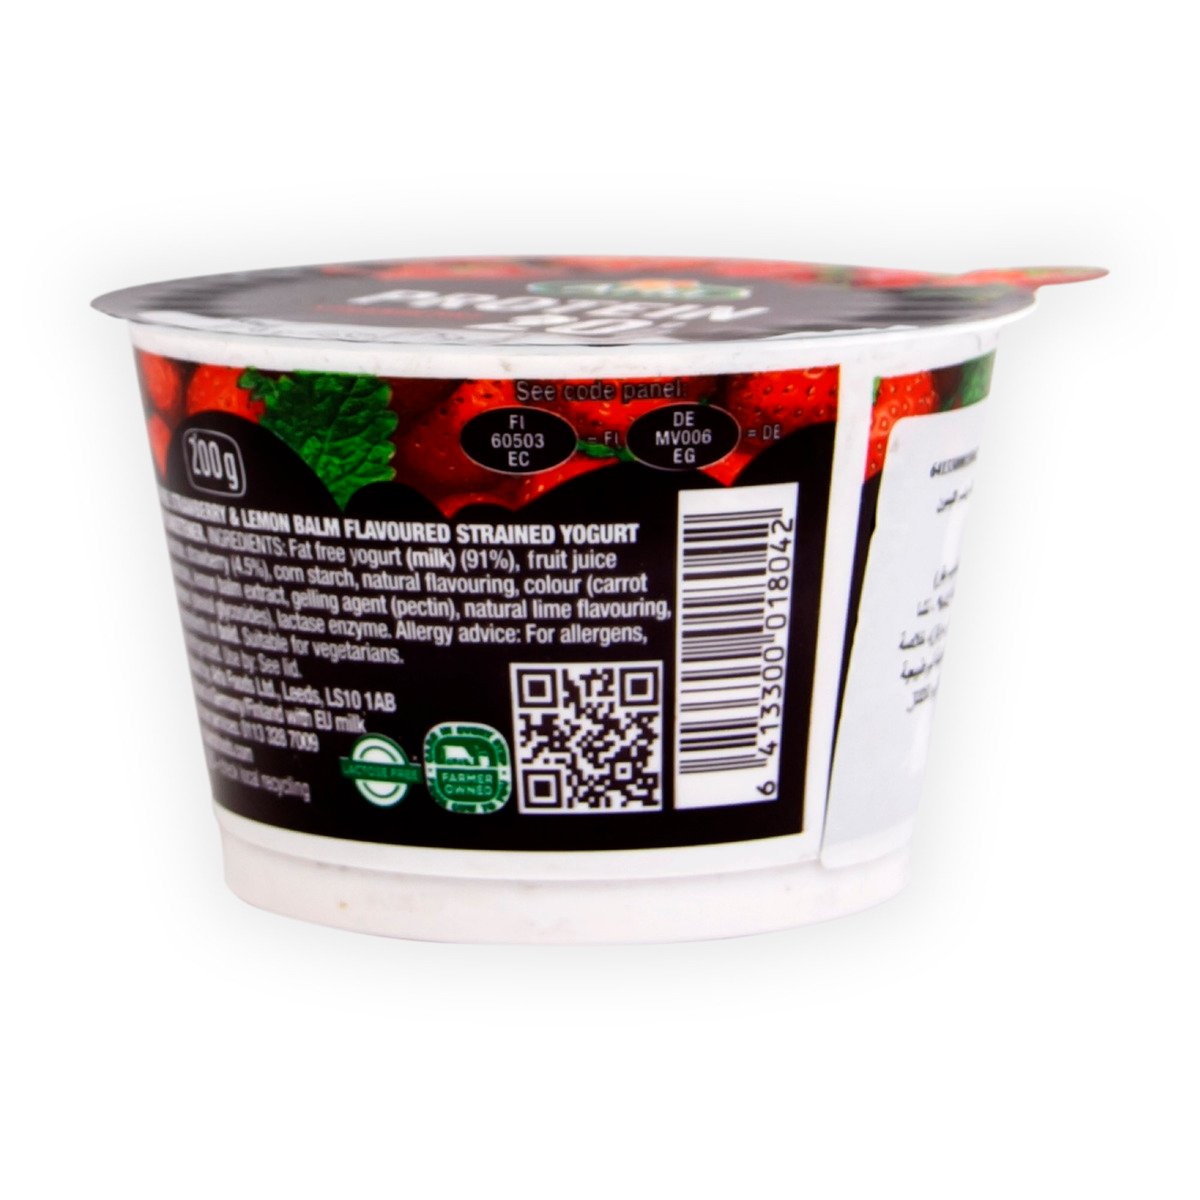 Arla Protein Strawberry Yogurt 200G